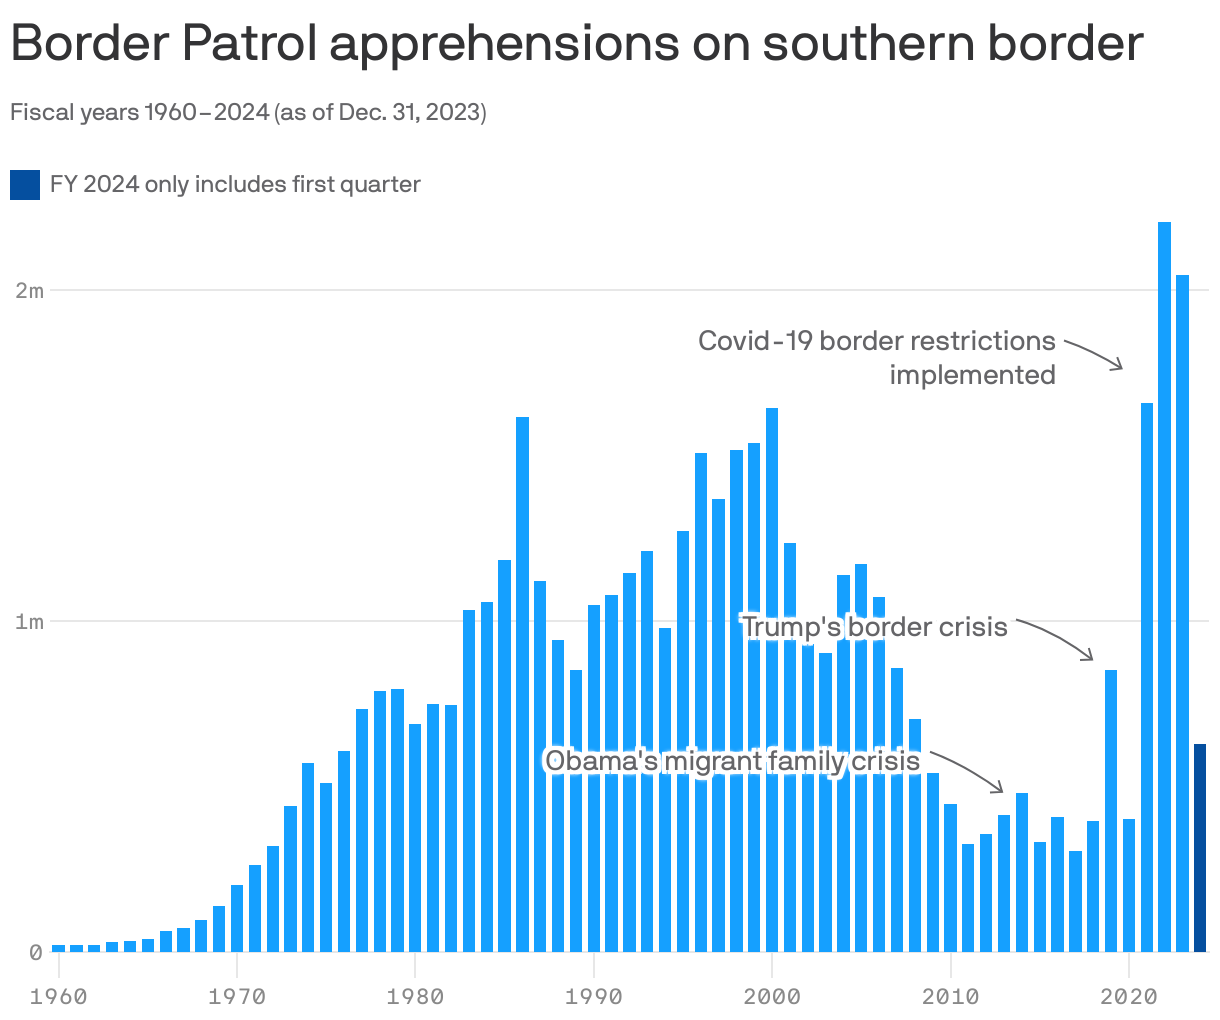 Border patrol apprehensions on southern border